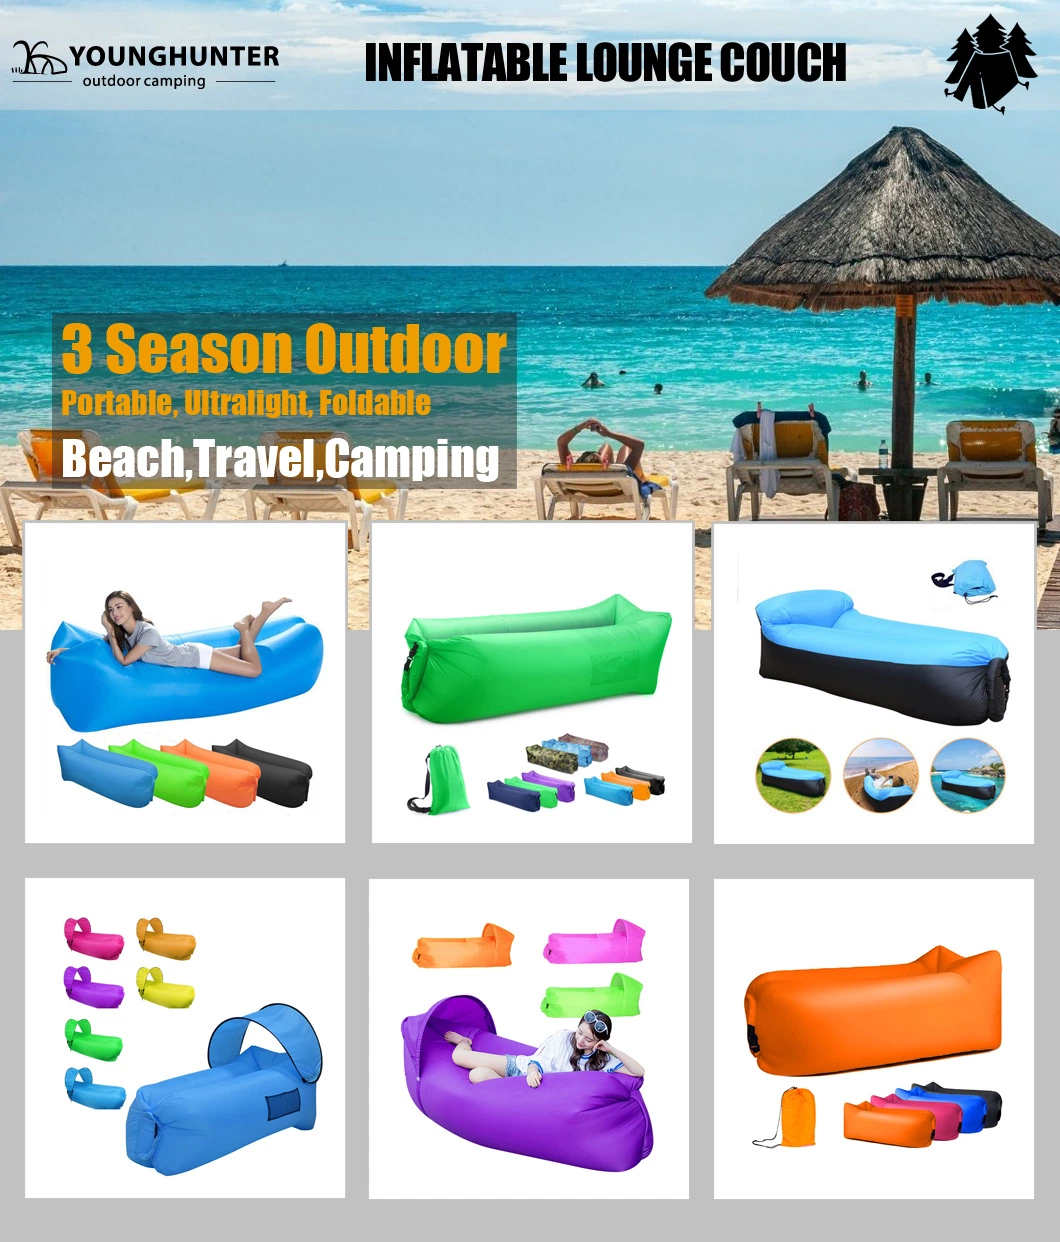 Custom Portable Outdoor Camping Beach Bed Air Sofa High Quality Inflatable Couch Lounger Lazy Bag Air Sofa for Beach Sleeping Bag